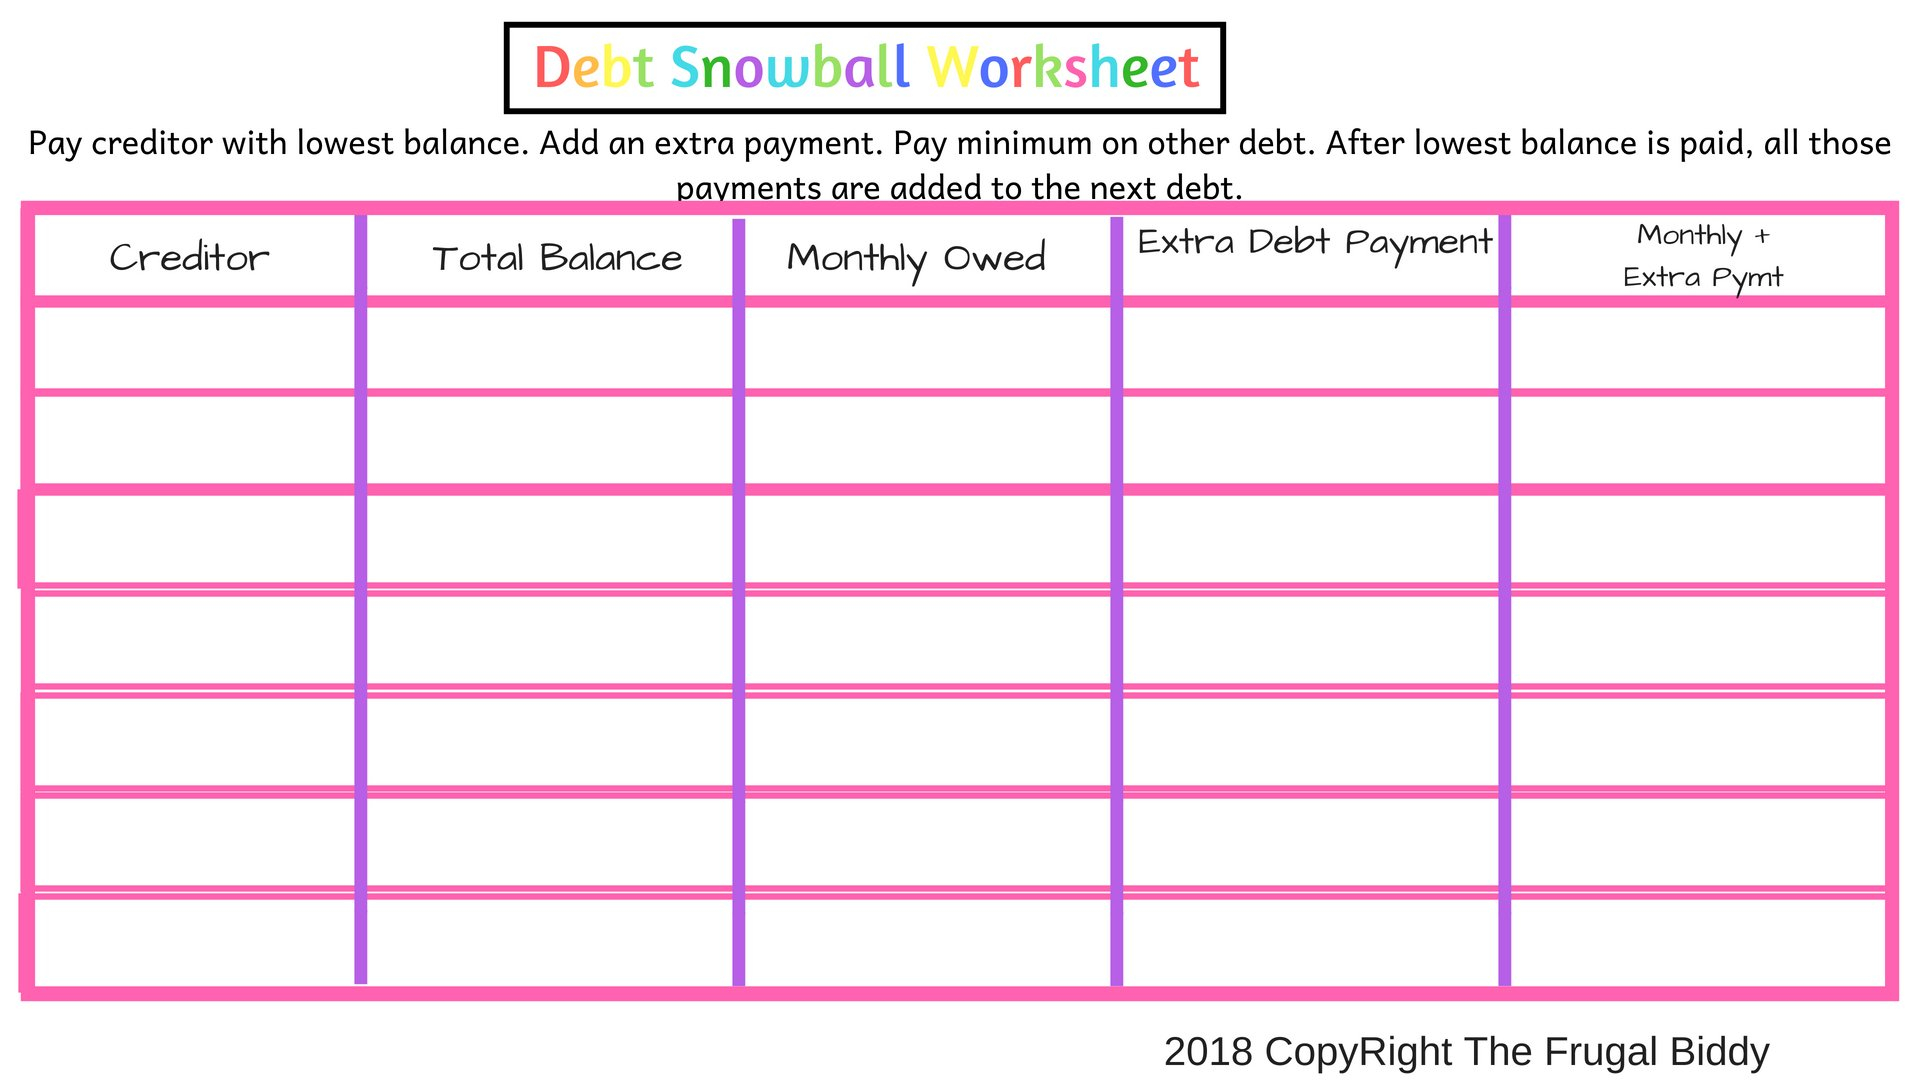 Debt Snowball Worksheet  The Frugal Biddy Inside Debt Snowball Worksheet